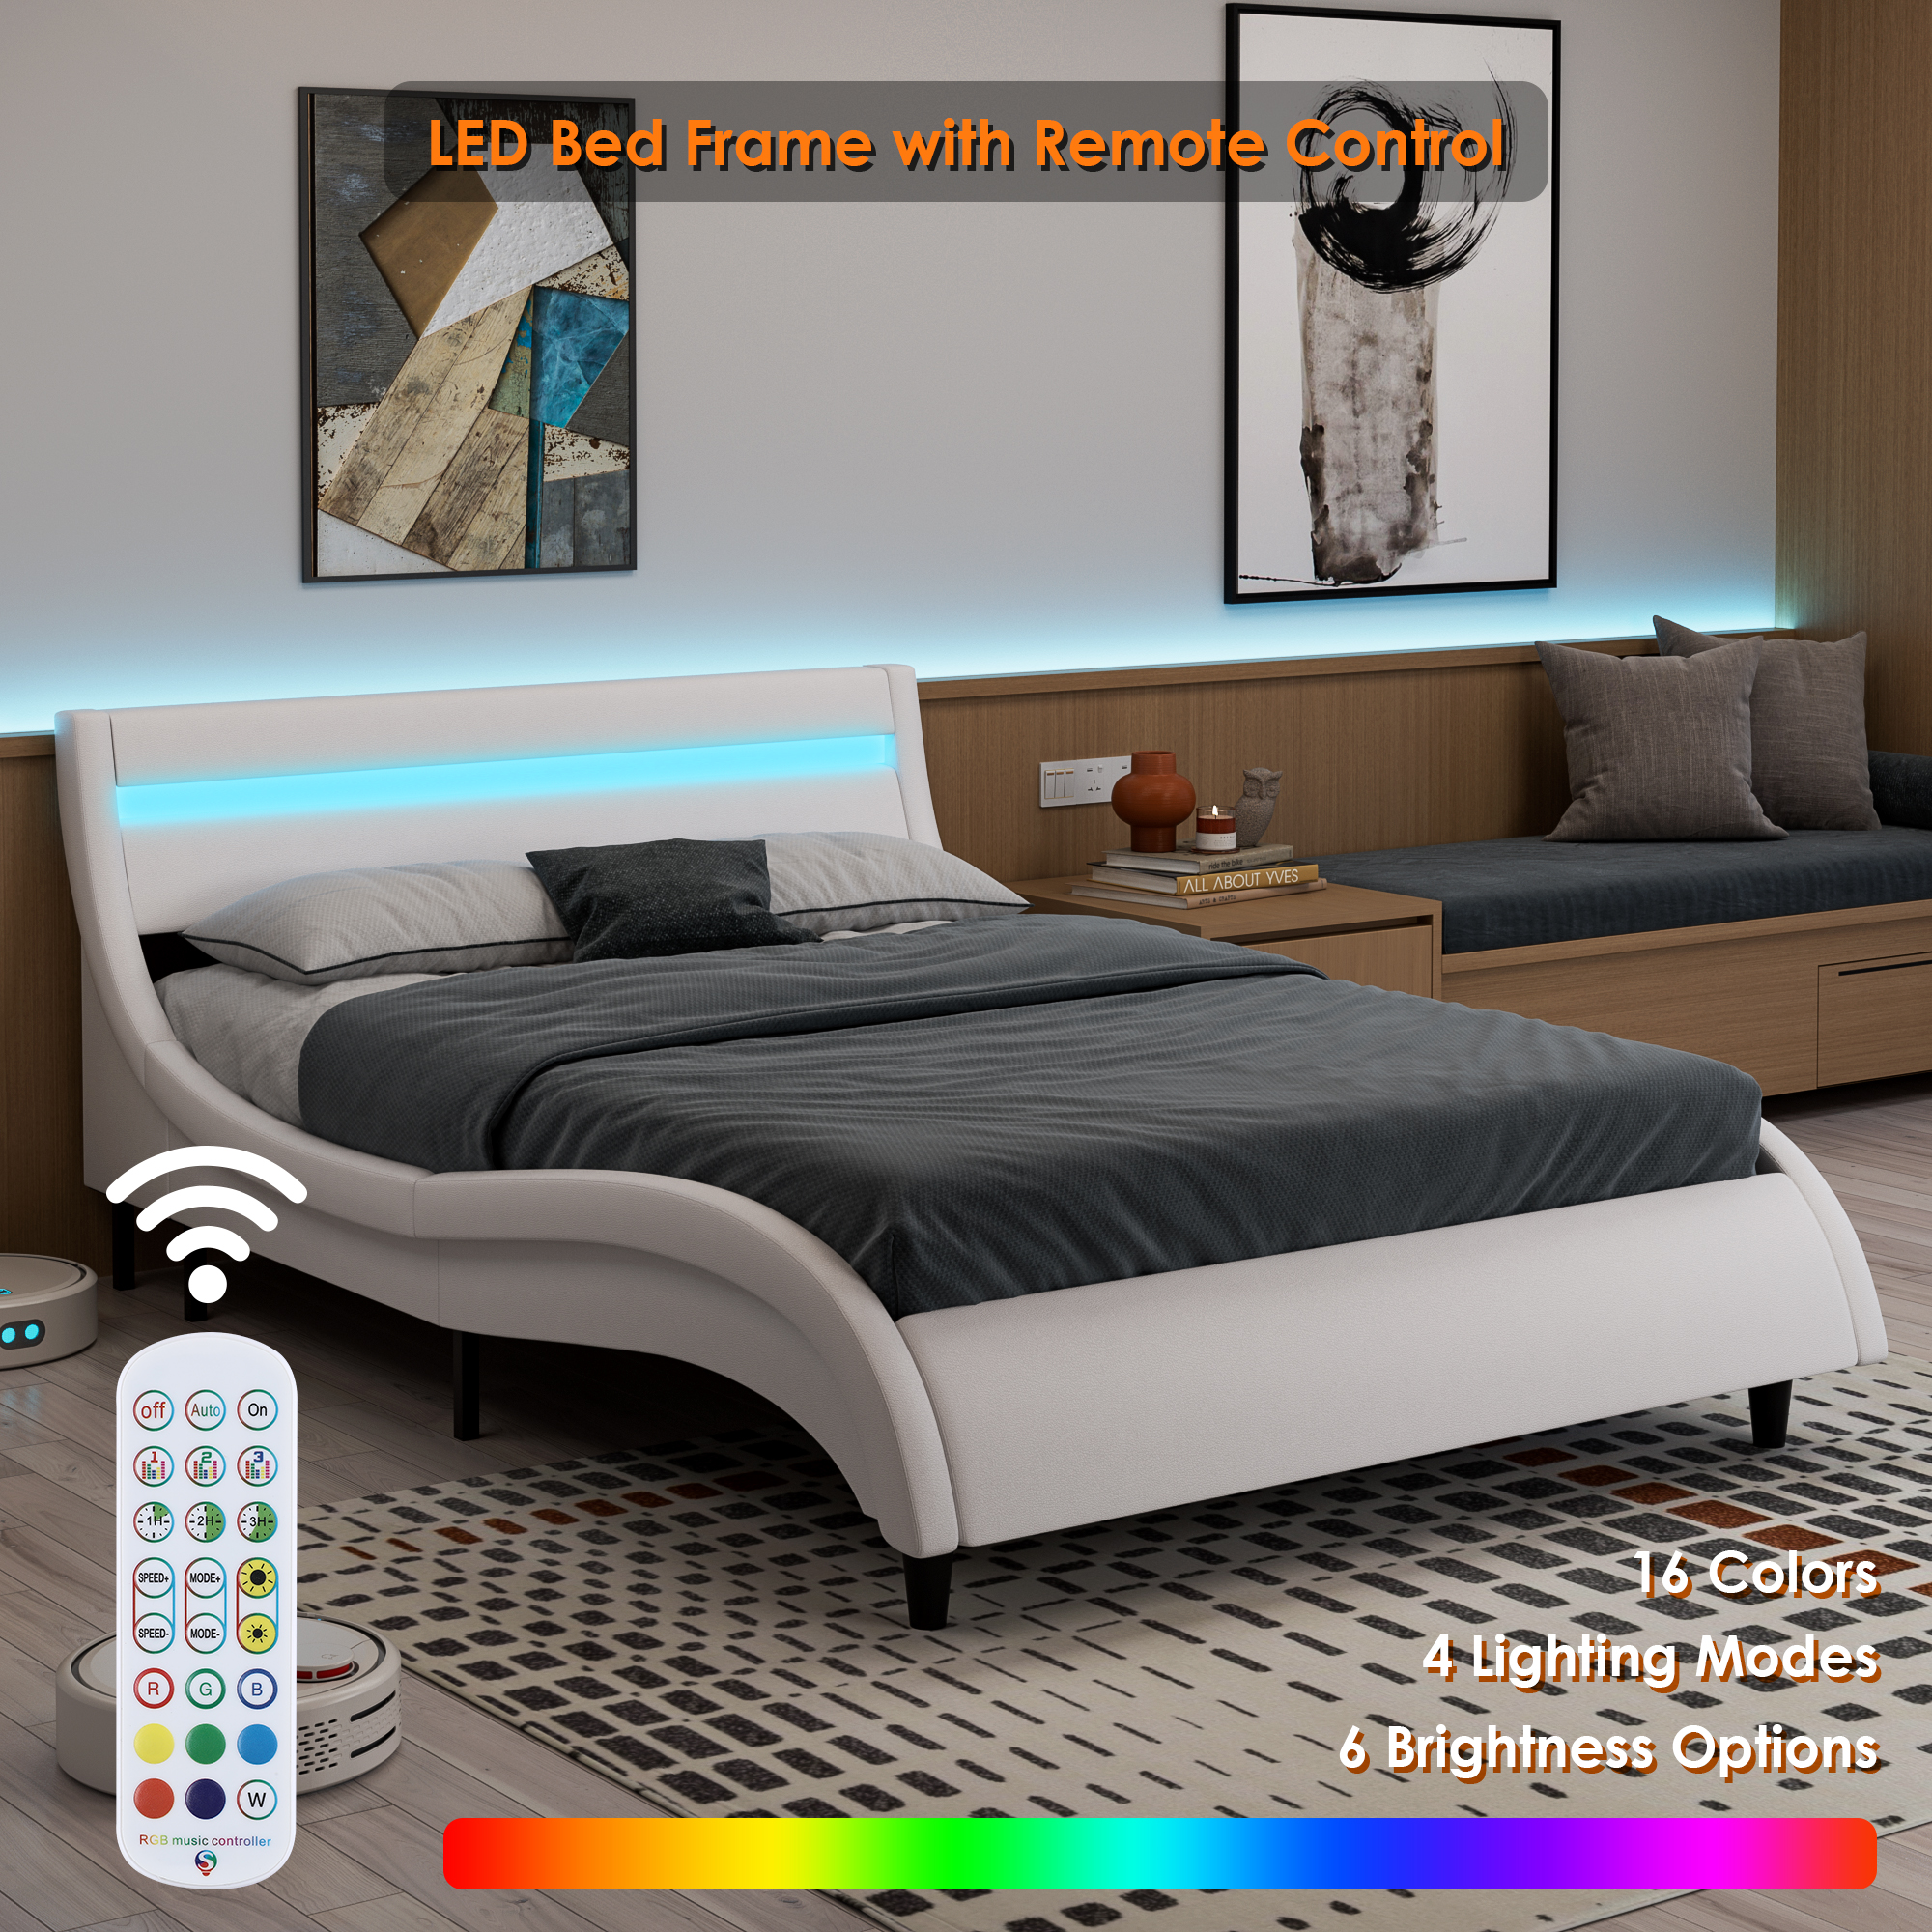 Homfa Full Size Bed Frame, 16 Colors Led Wooden Platform Bed Frame with Adjustable Upholstered Headboard, White - image 1 of 8